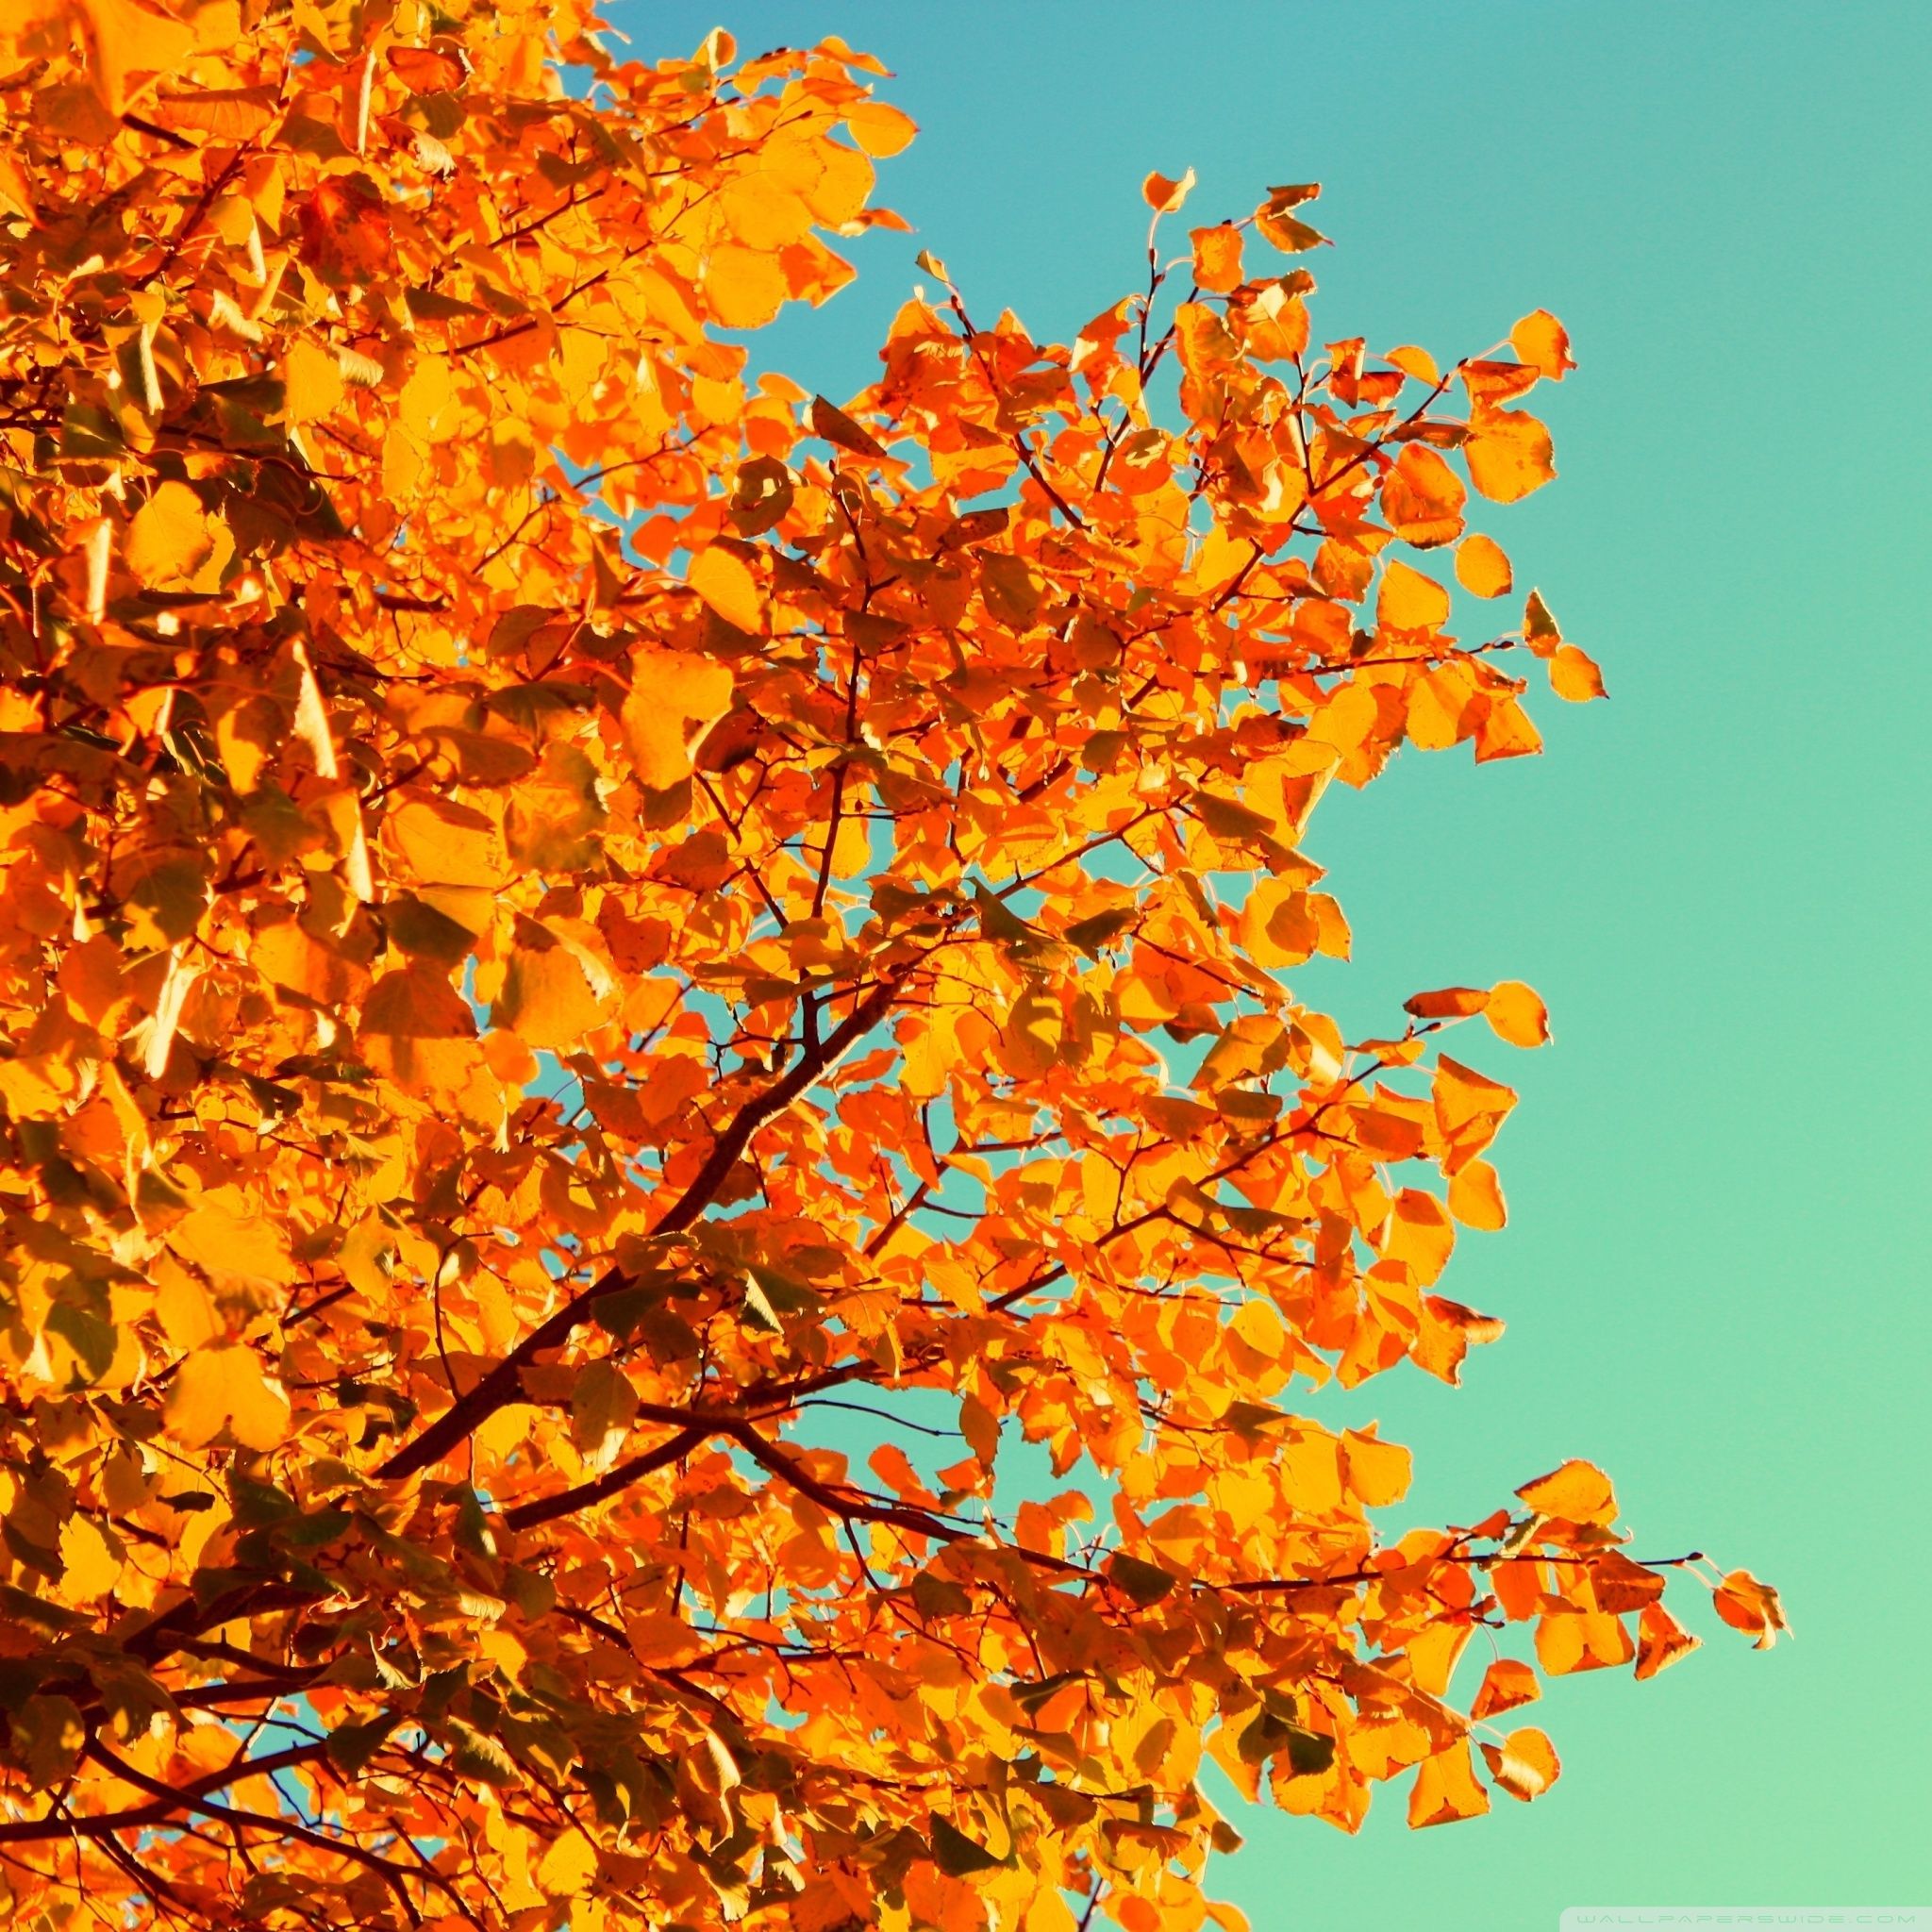 Retro Autumn Ultra HD Desktop Background Wallpaper for 4K UHD TV, Tablet